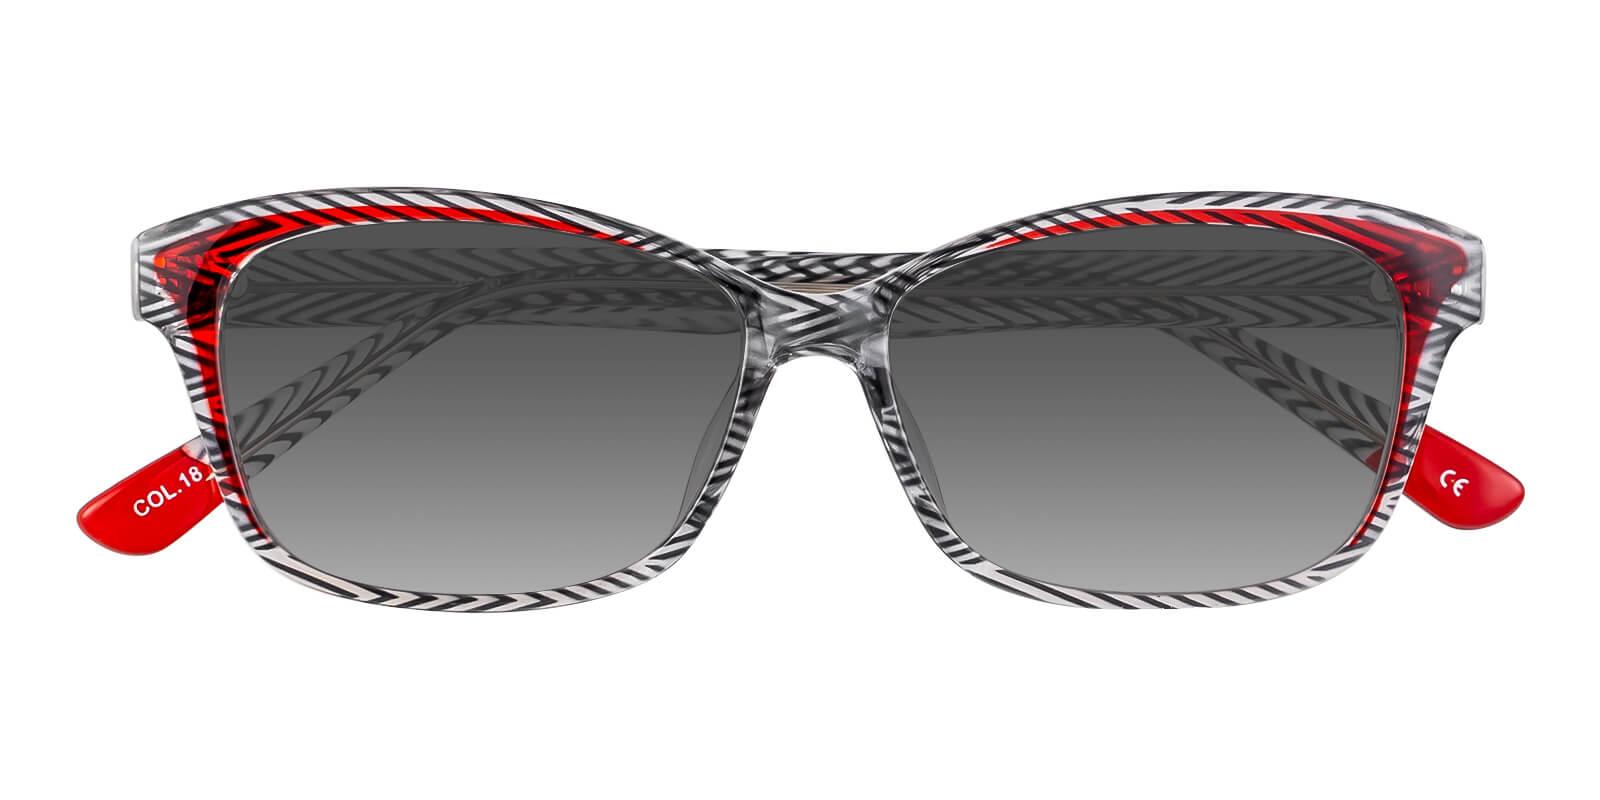 Dazzle Pattern Plastic Sunglasses , UniversalBridgeFit Frames from ABBE Glasses